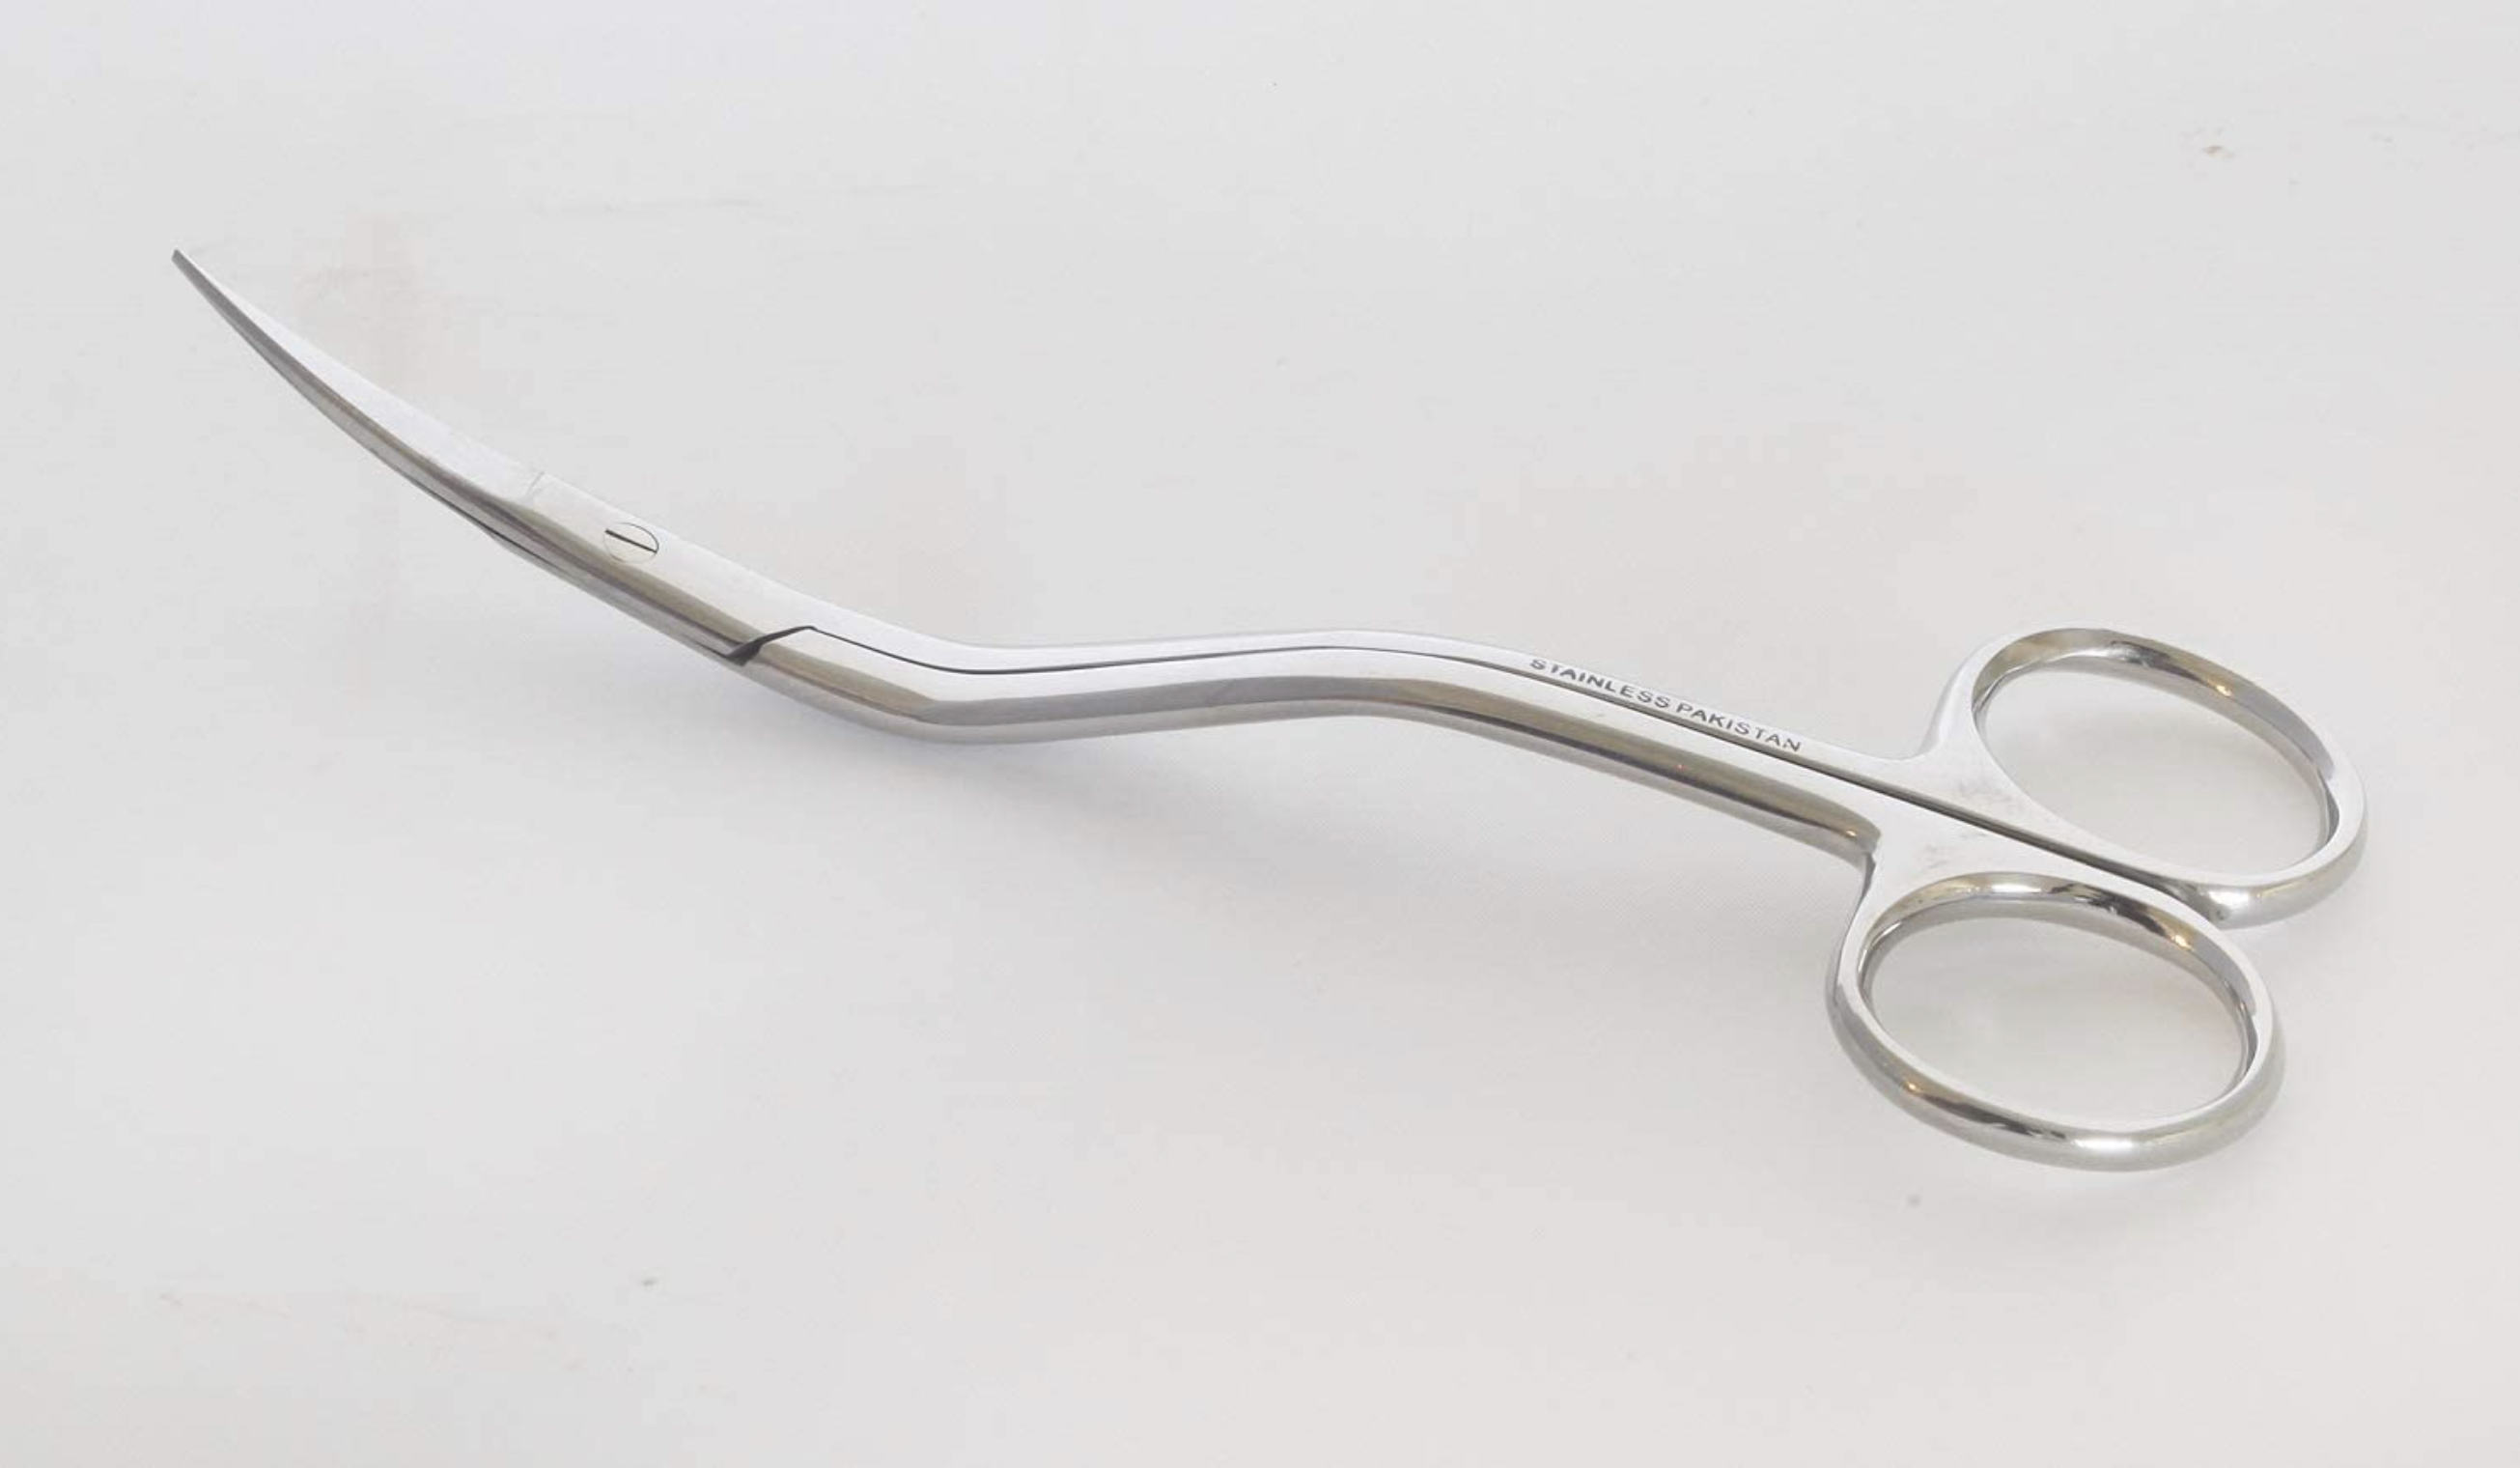 Curved Applique Scissors 4 - Havels – Quiltandsew.com